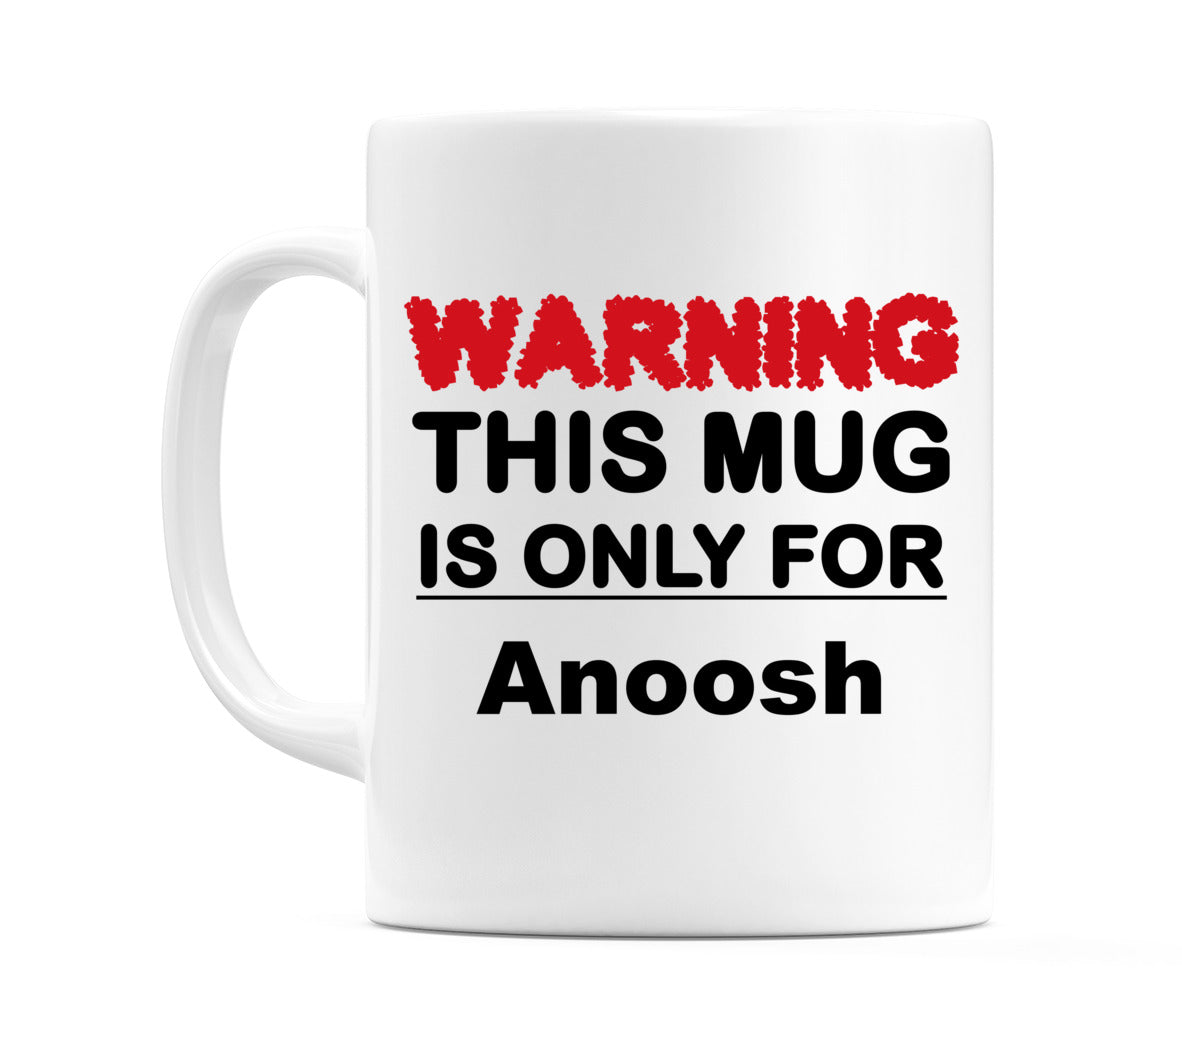 Warning This Mug is ONLY for Anoosh Mug